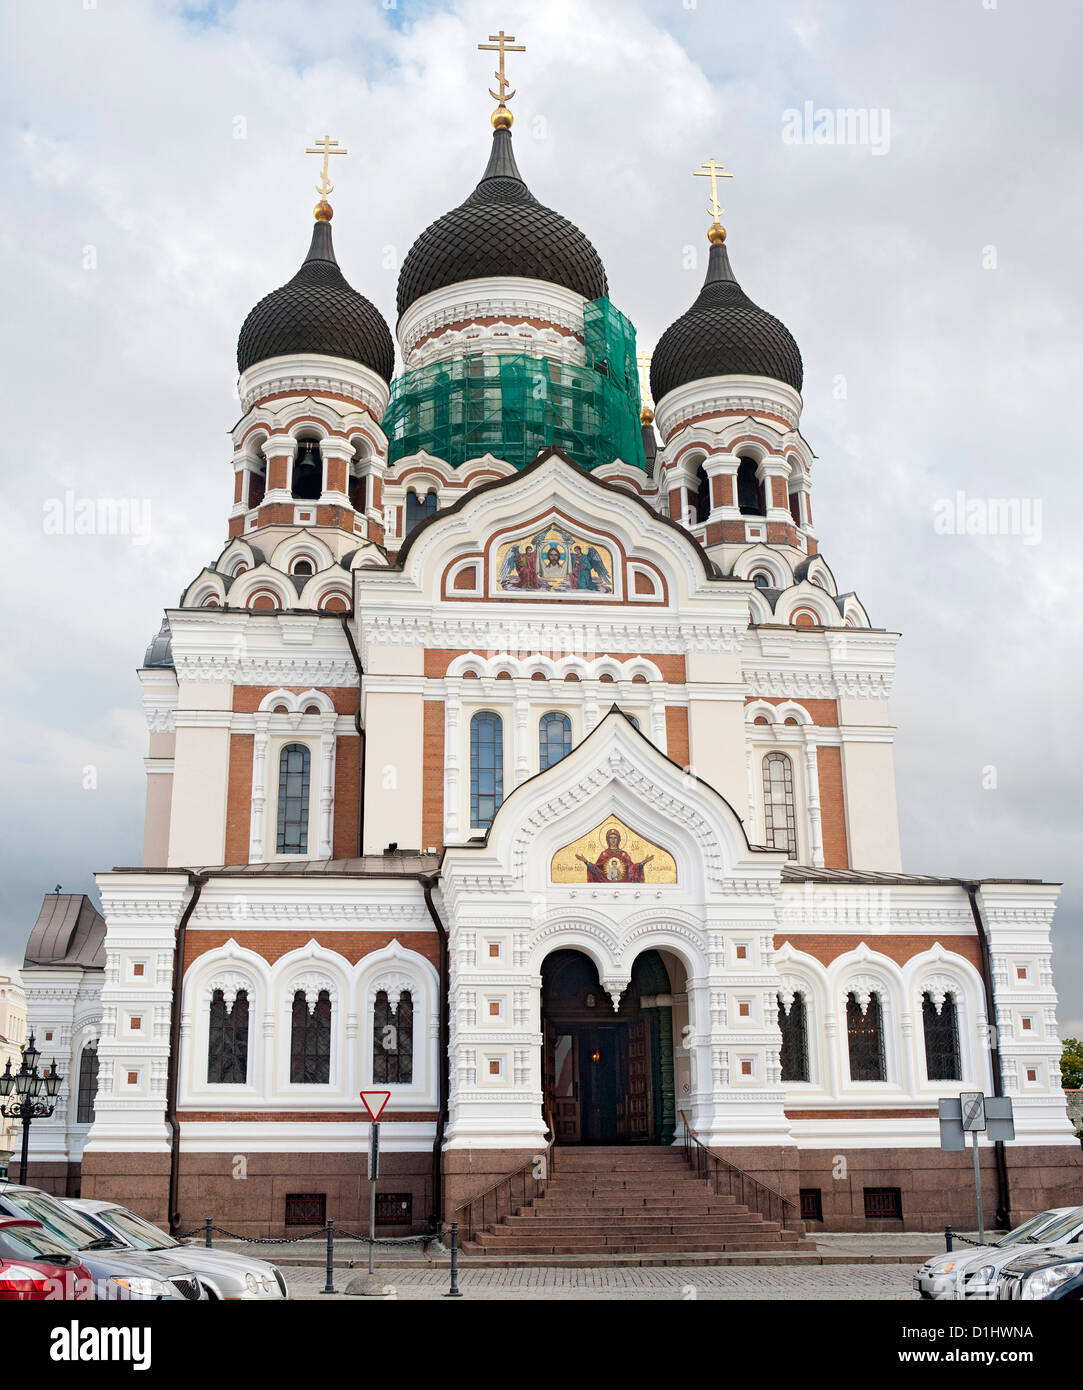 Alexander Nevsky Cathedral in Tallinn, the capital of Estonia. Stock Photo